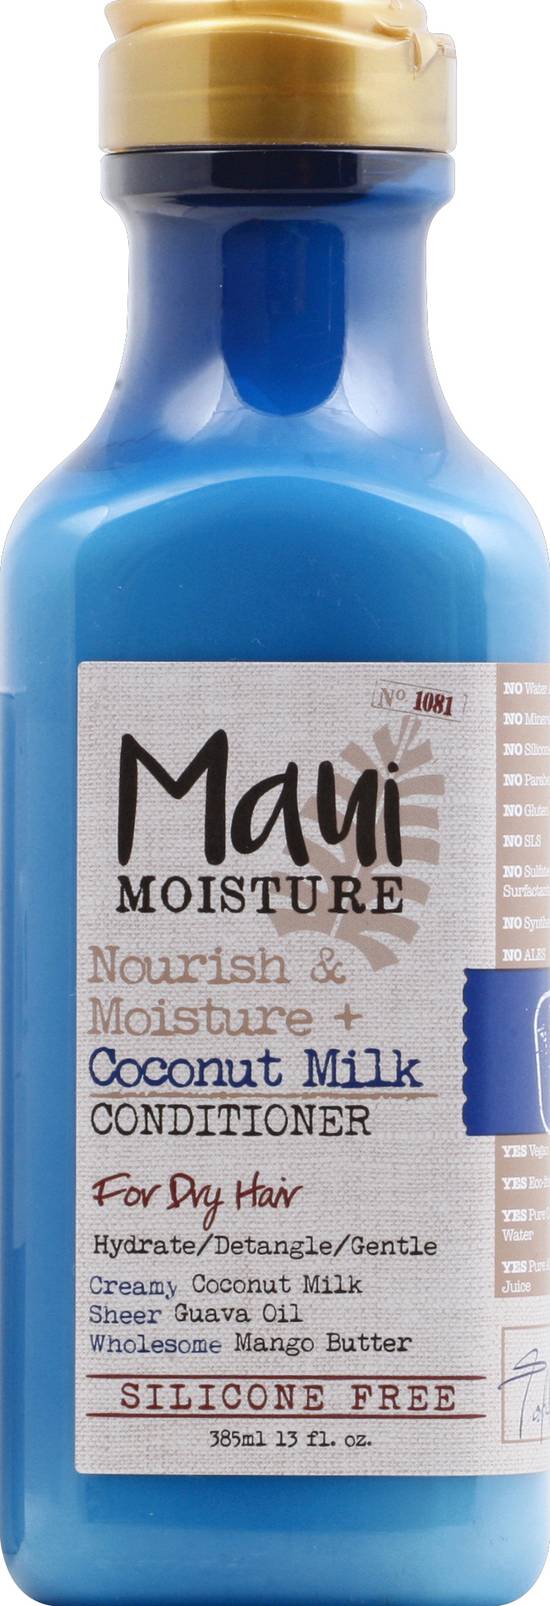 Maui Moisture Nourish & Moisture + Coconut Milk Conditioner